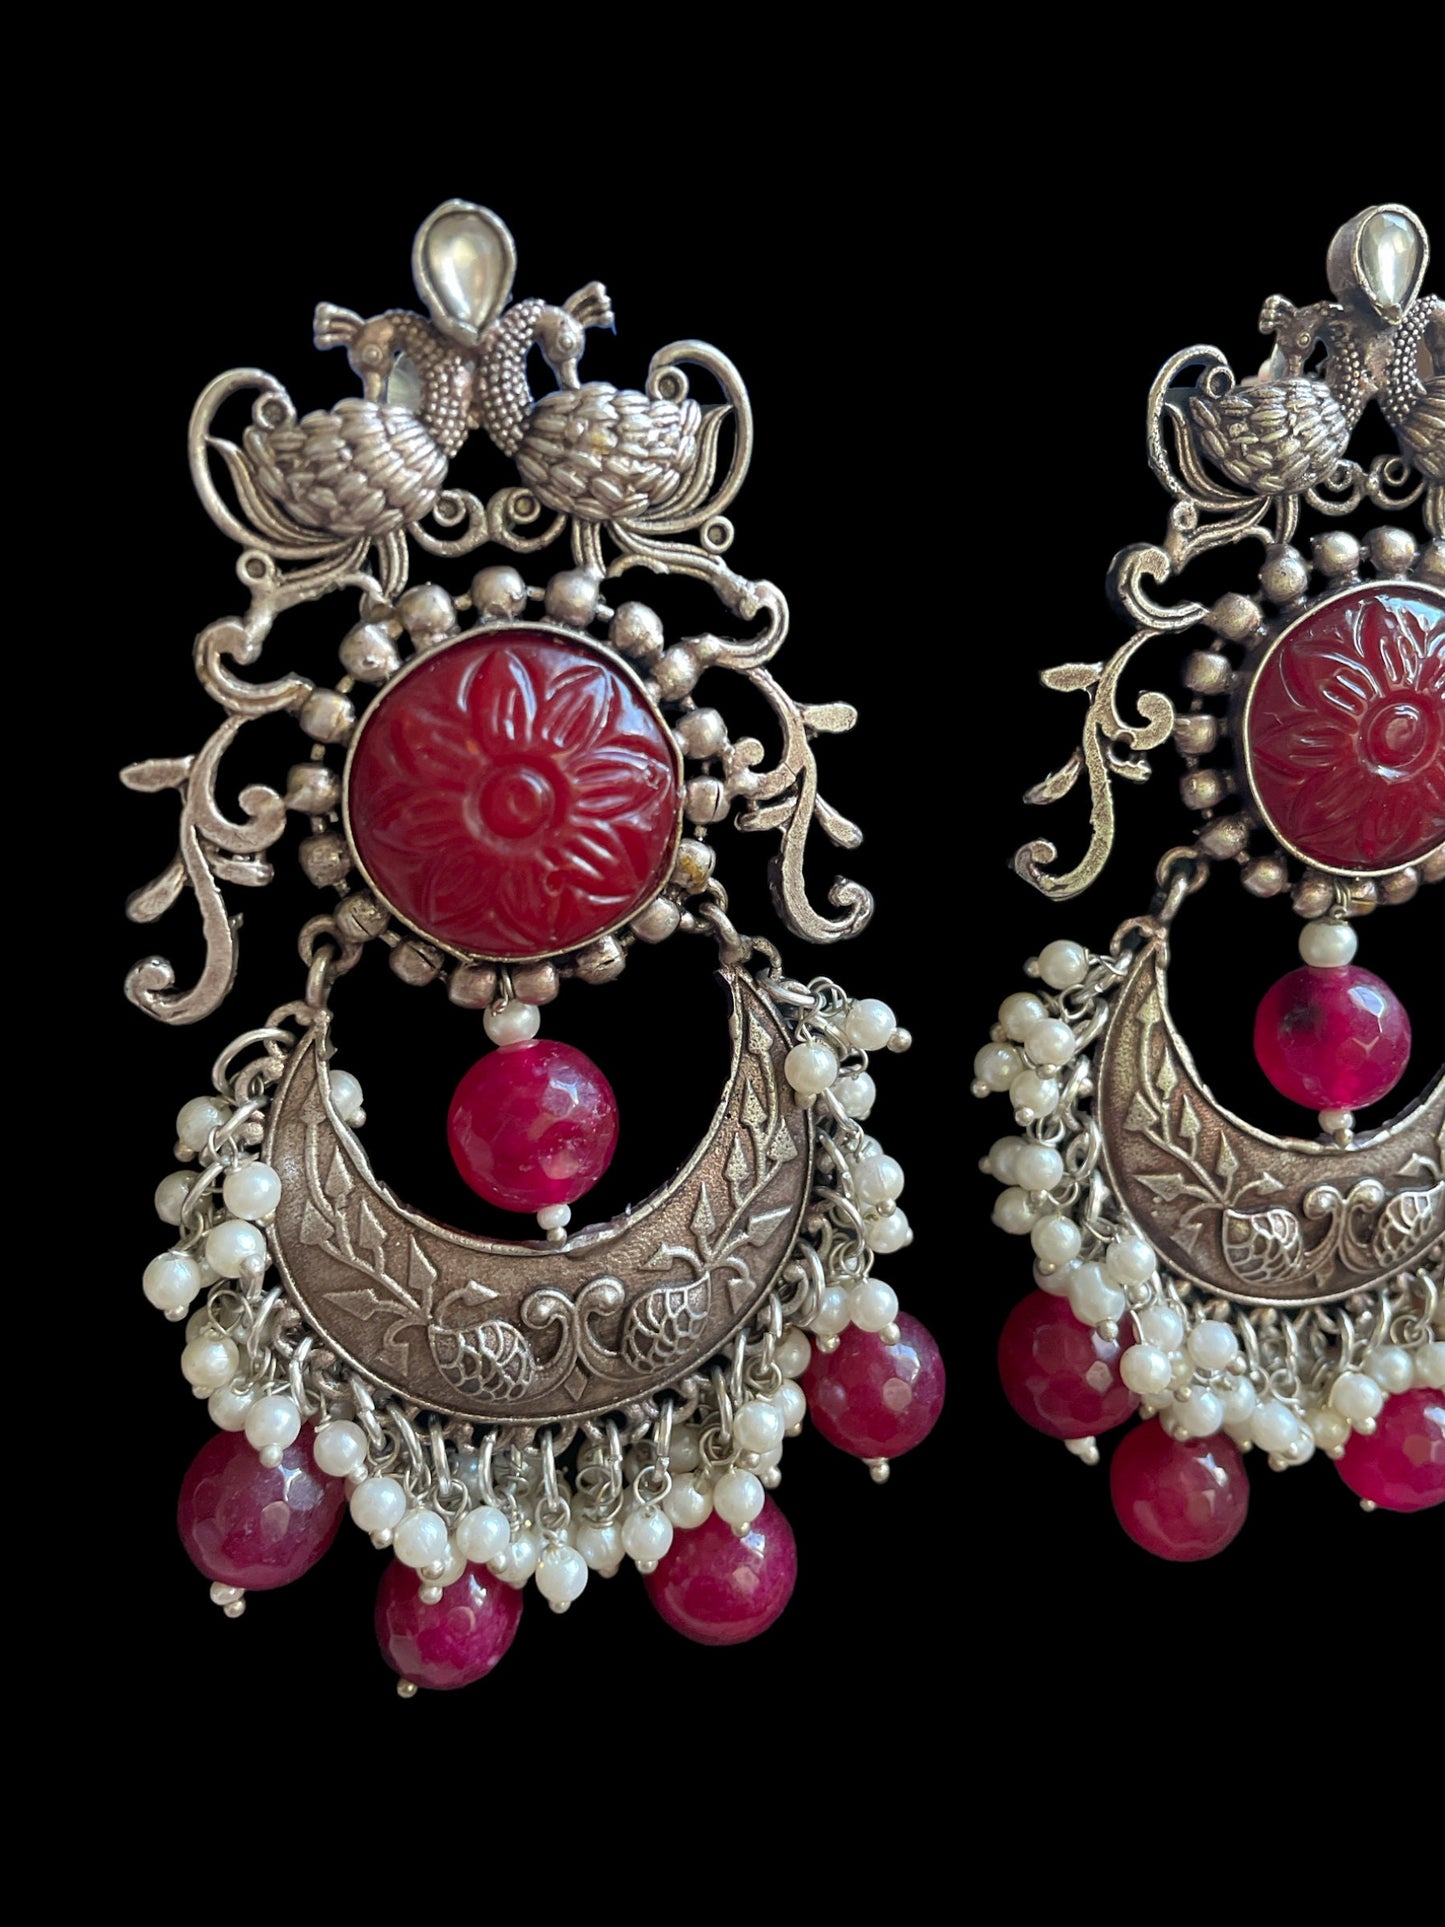 Silver Festive Jhumka/Bollywood earrings/Silver Antique traditional jhumki/Pakistani Earrings/Bridal long pearl earrings/simple light jhumka